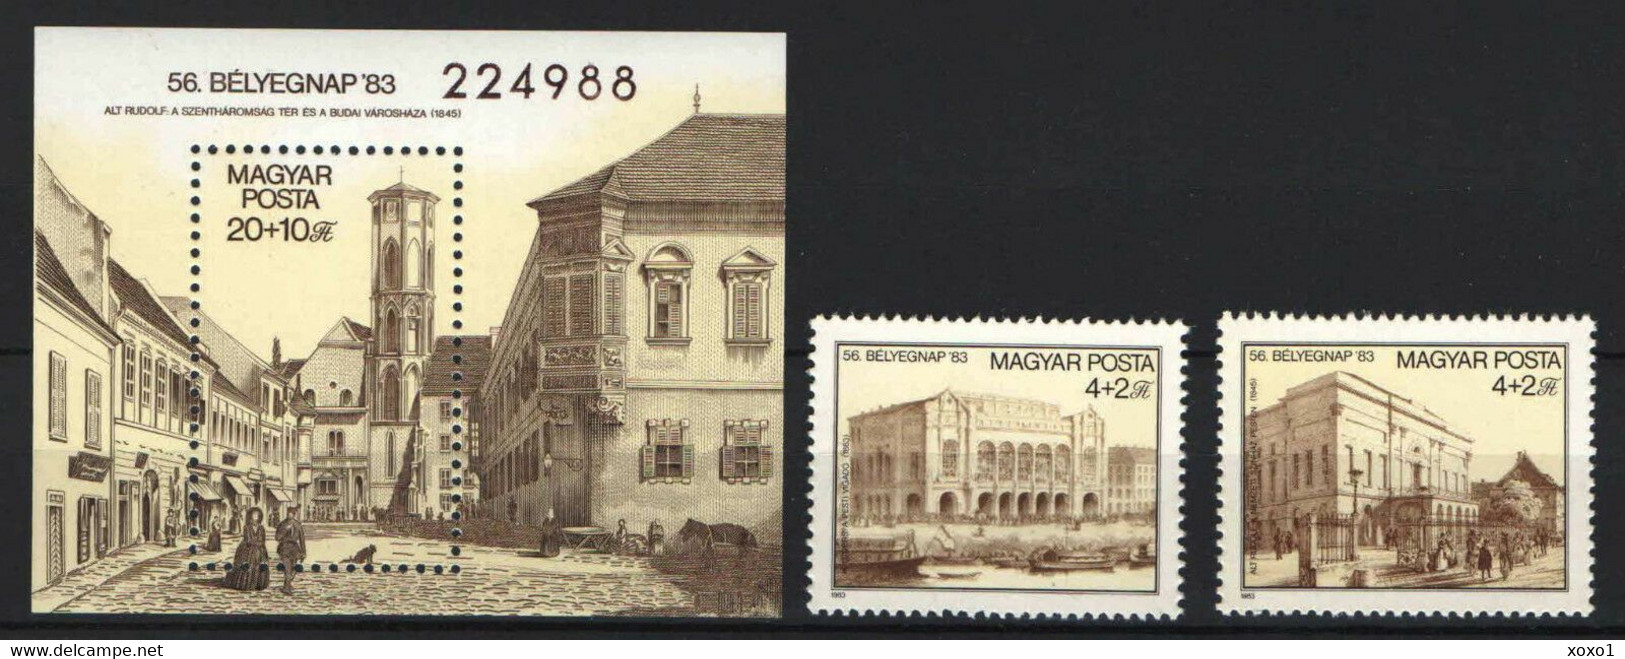 Hungary 1983 MiNr. 3632 - 3634(Block 166) Ungarn Philately Stamp's Day, Architecture, Engraving 2v + S\sh MNH ** 7.40 € - Gravures